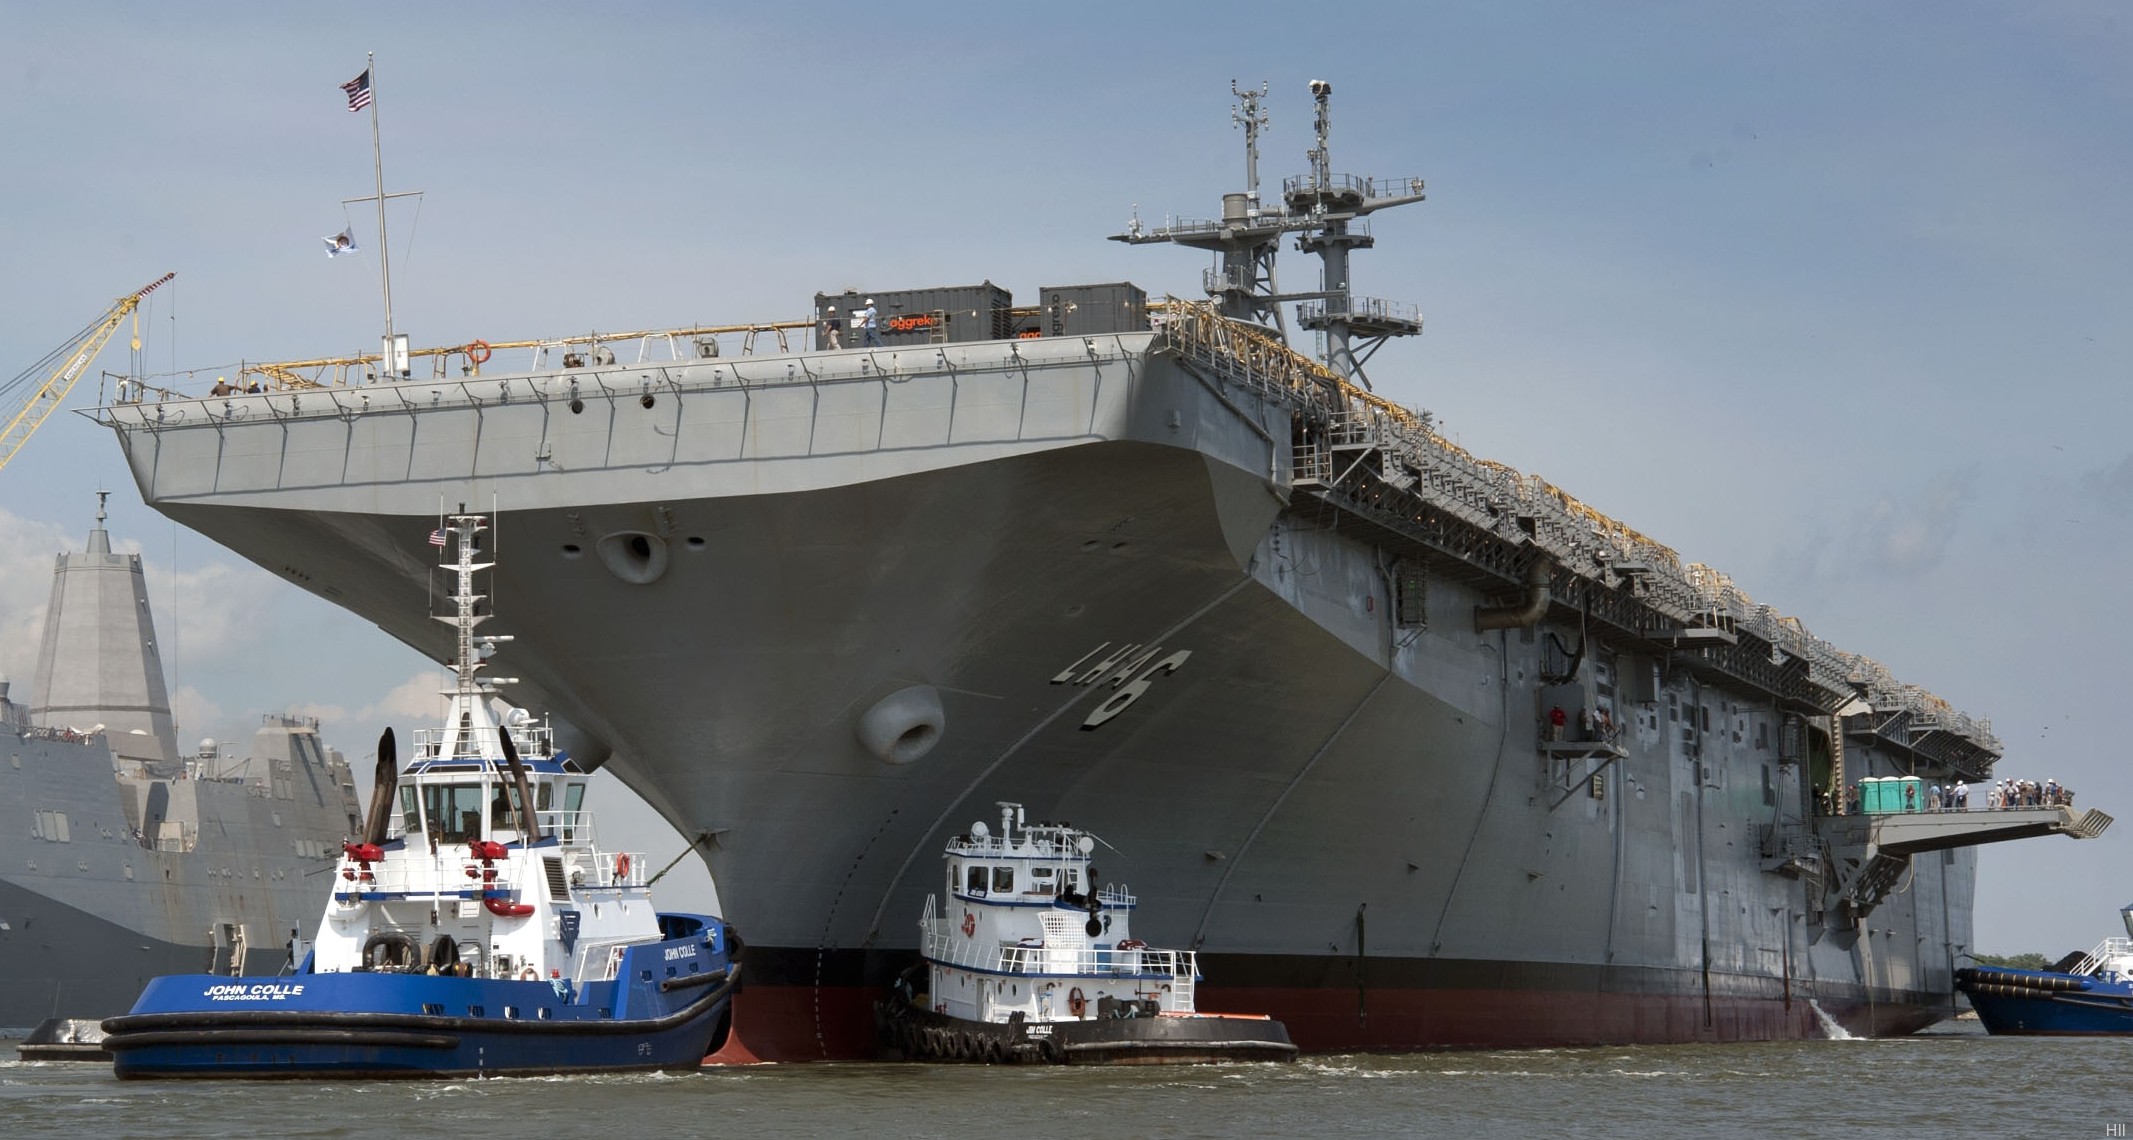 lha-6 uss america amphibious assault ship us navy 88 huntington ingalls shipbuilding pascagoula mississippi